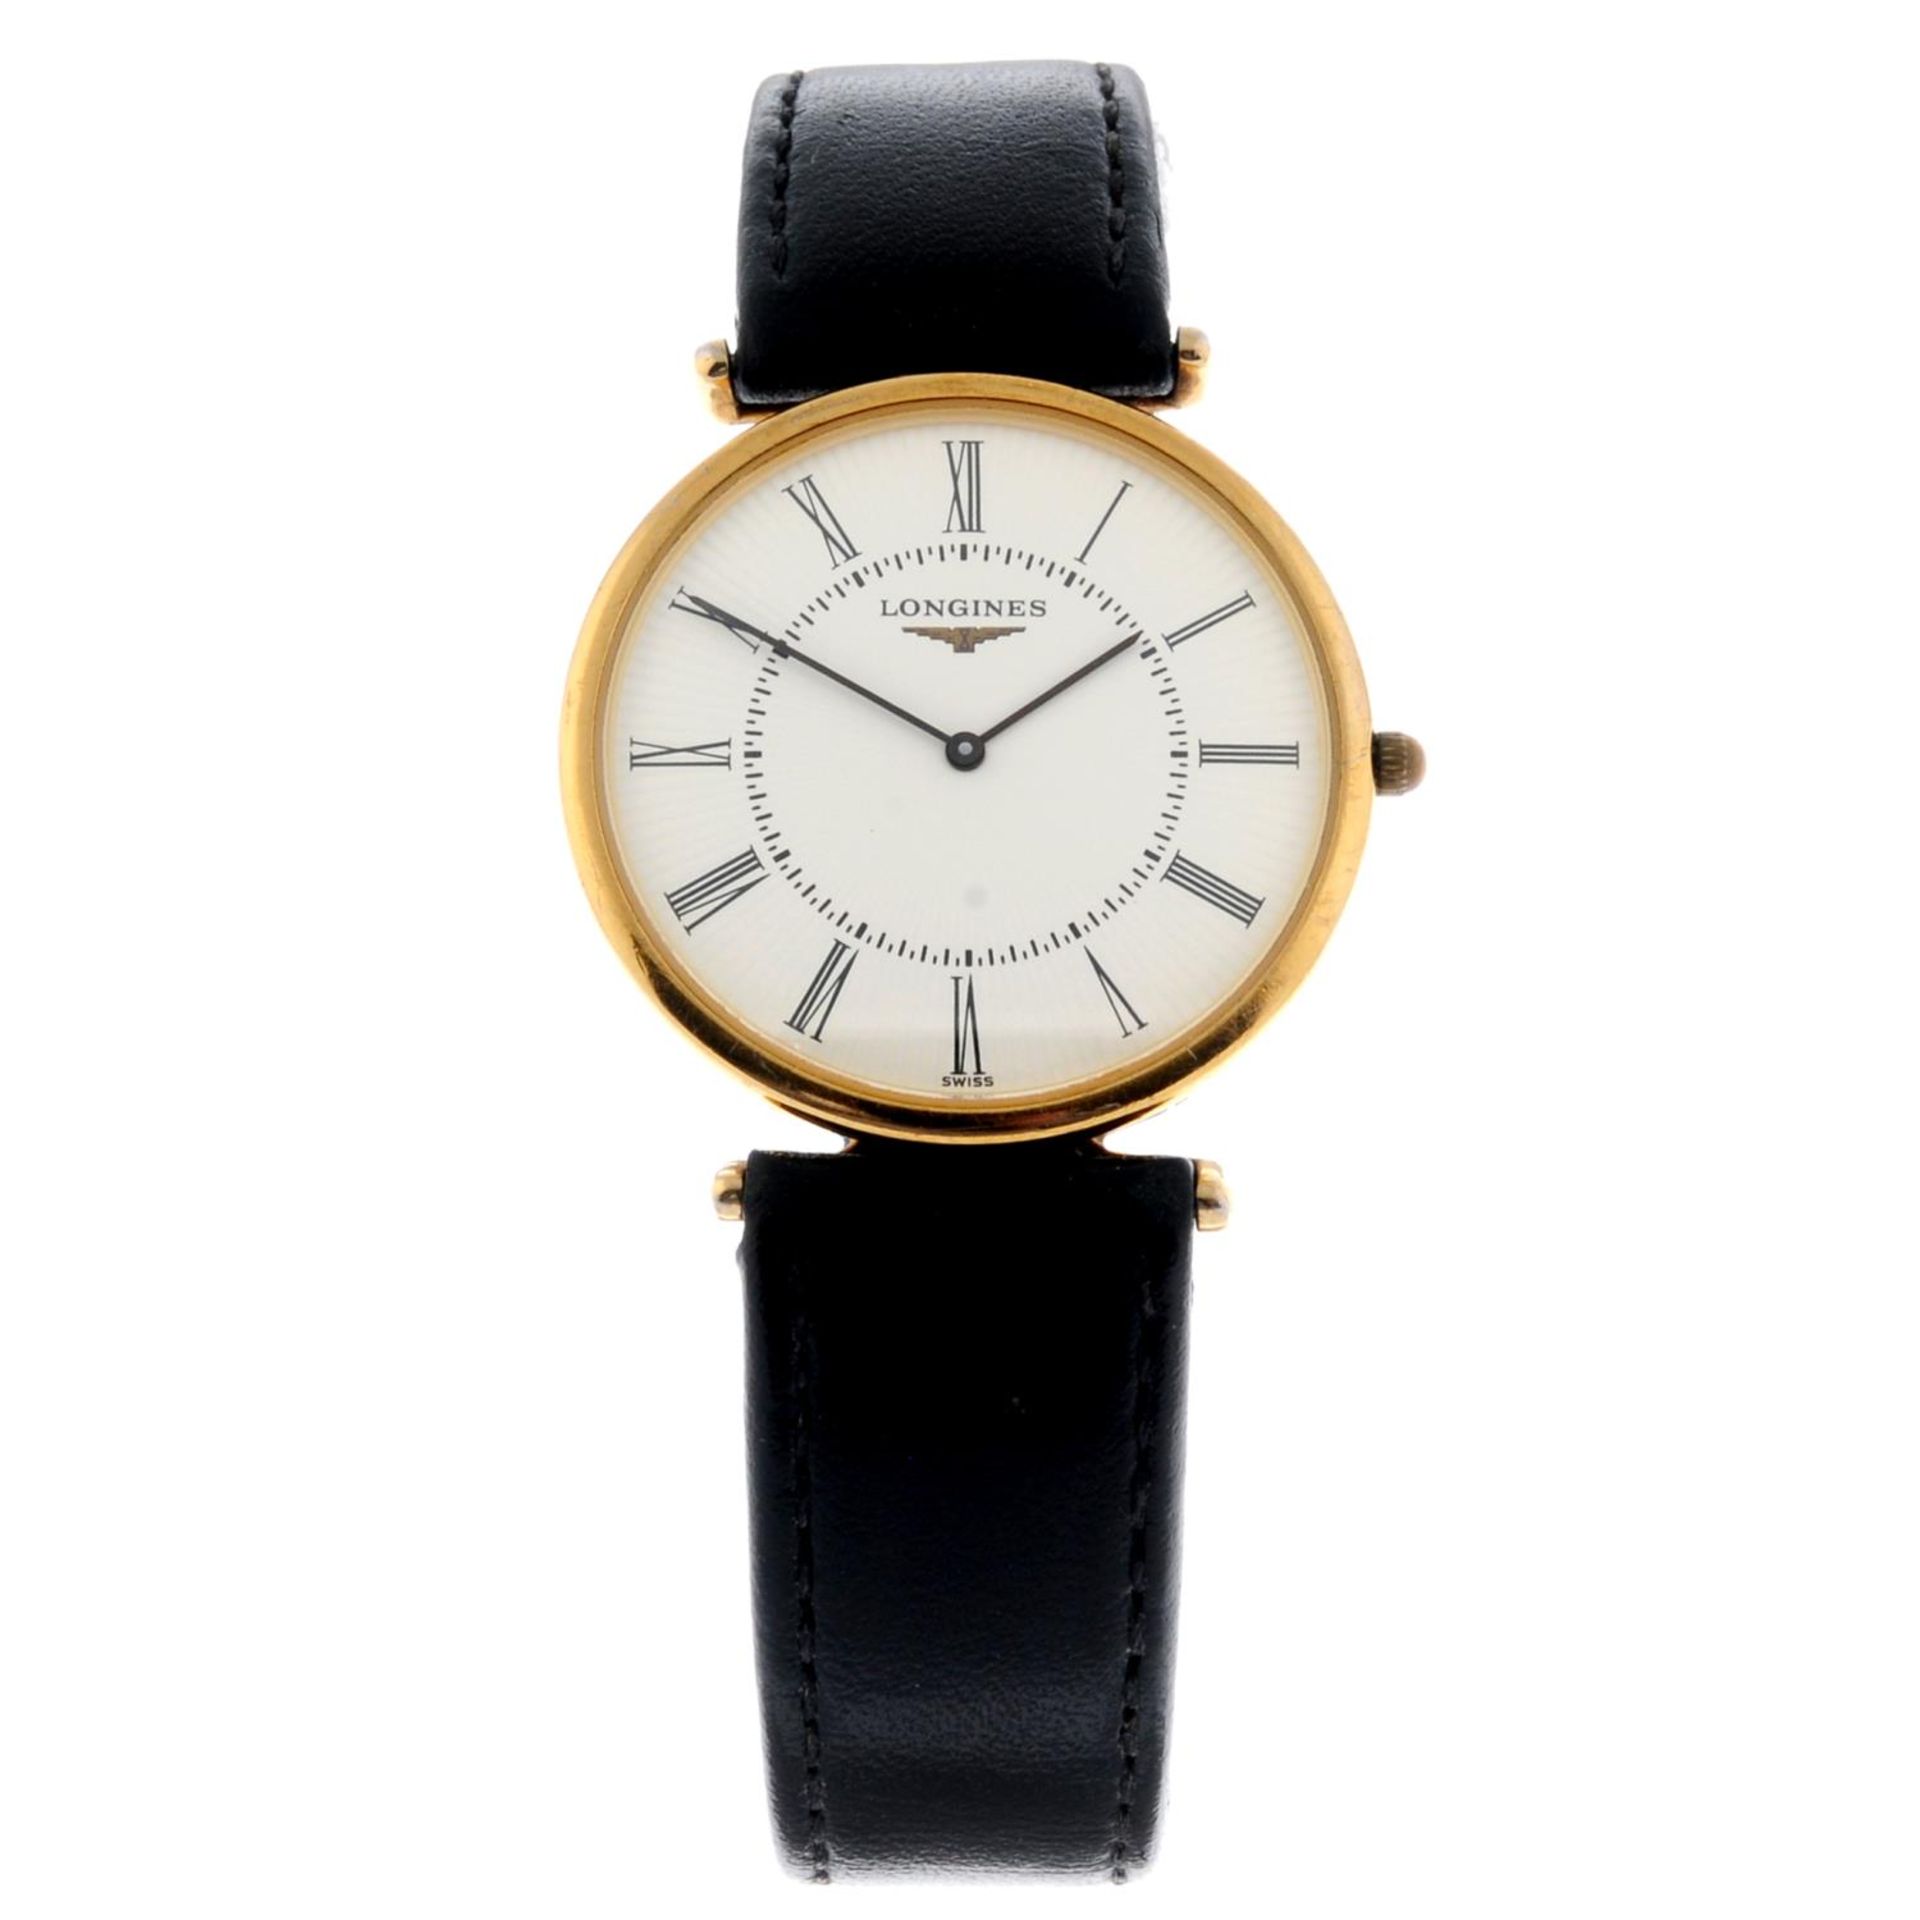 LONGINES - a gentleman's La Grande Classique wrist watch.